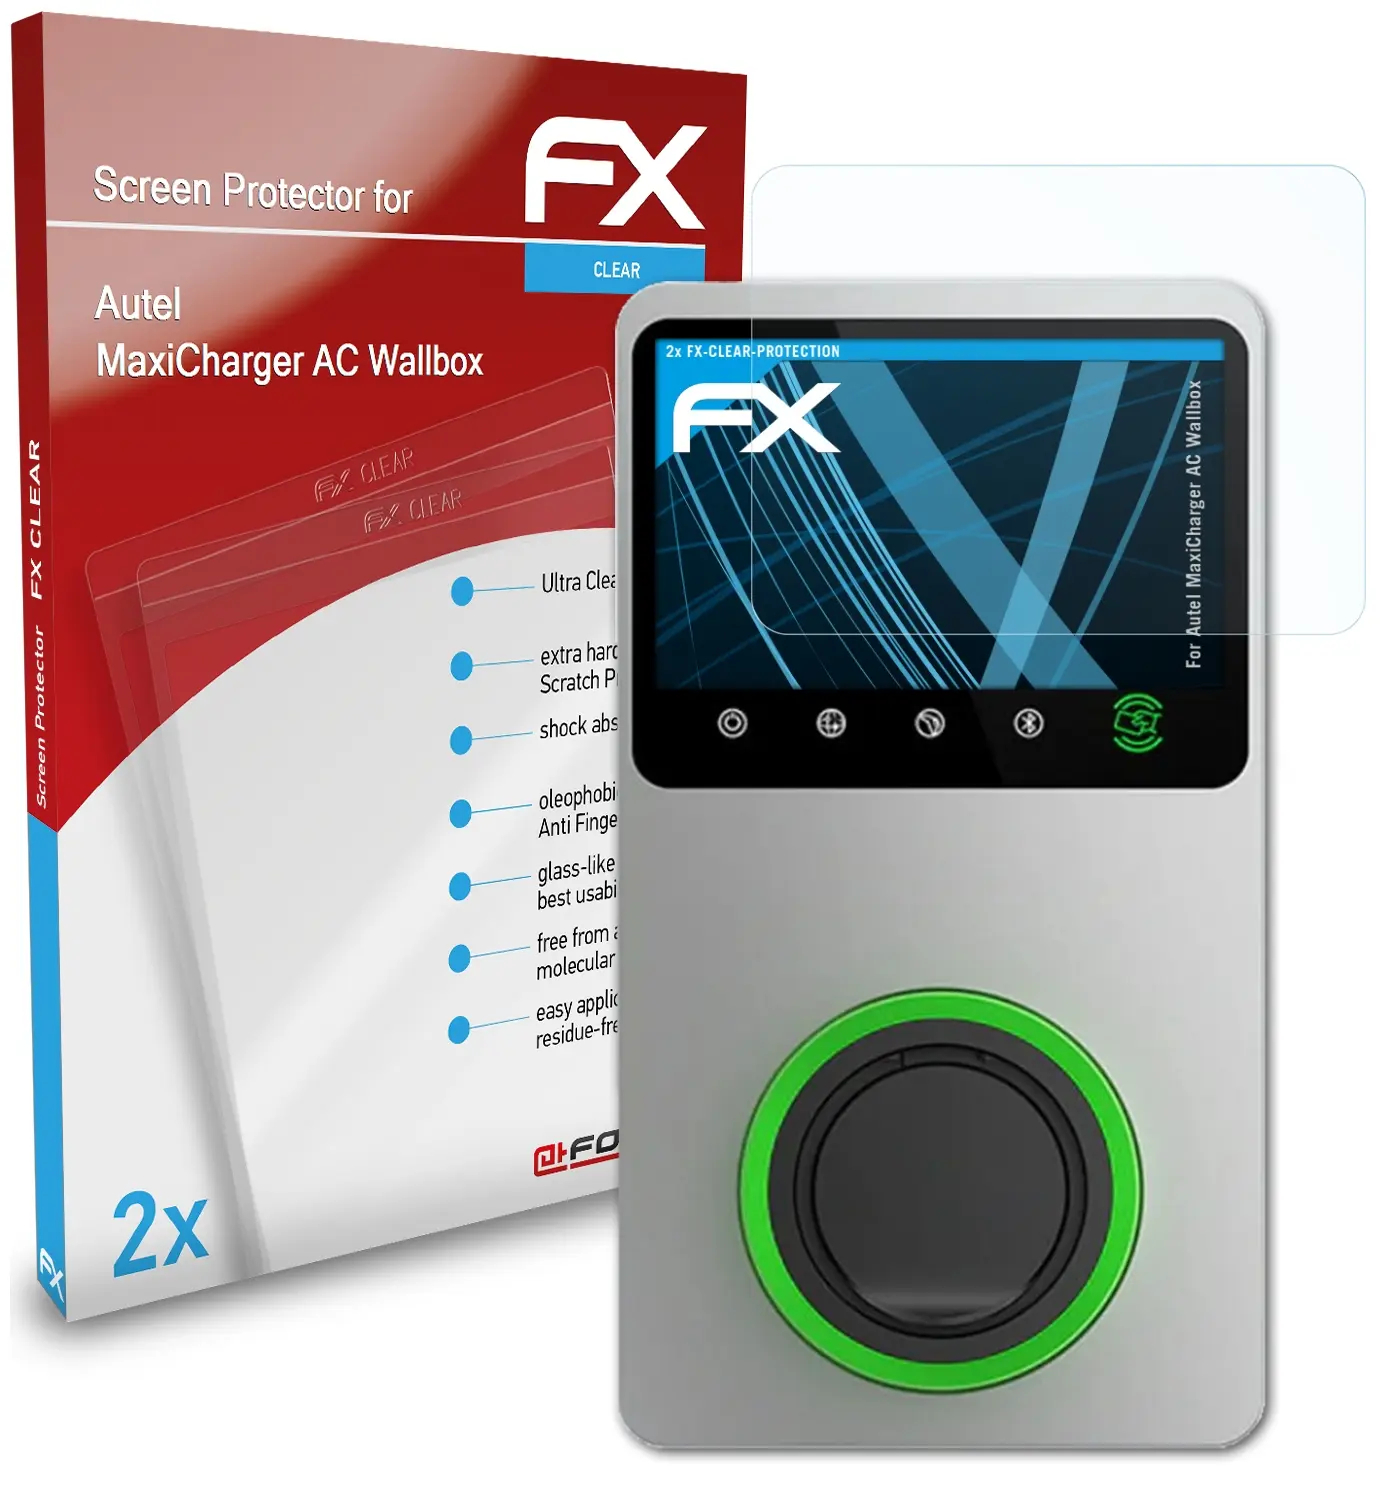 Autel MaxiCharger AC Wallbox 1